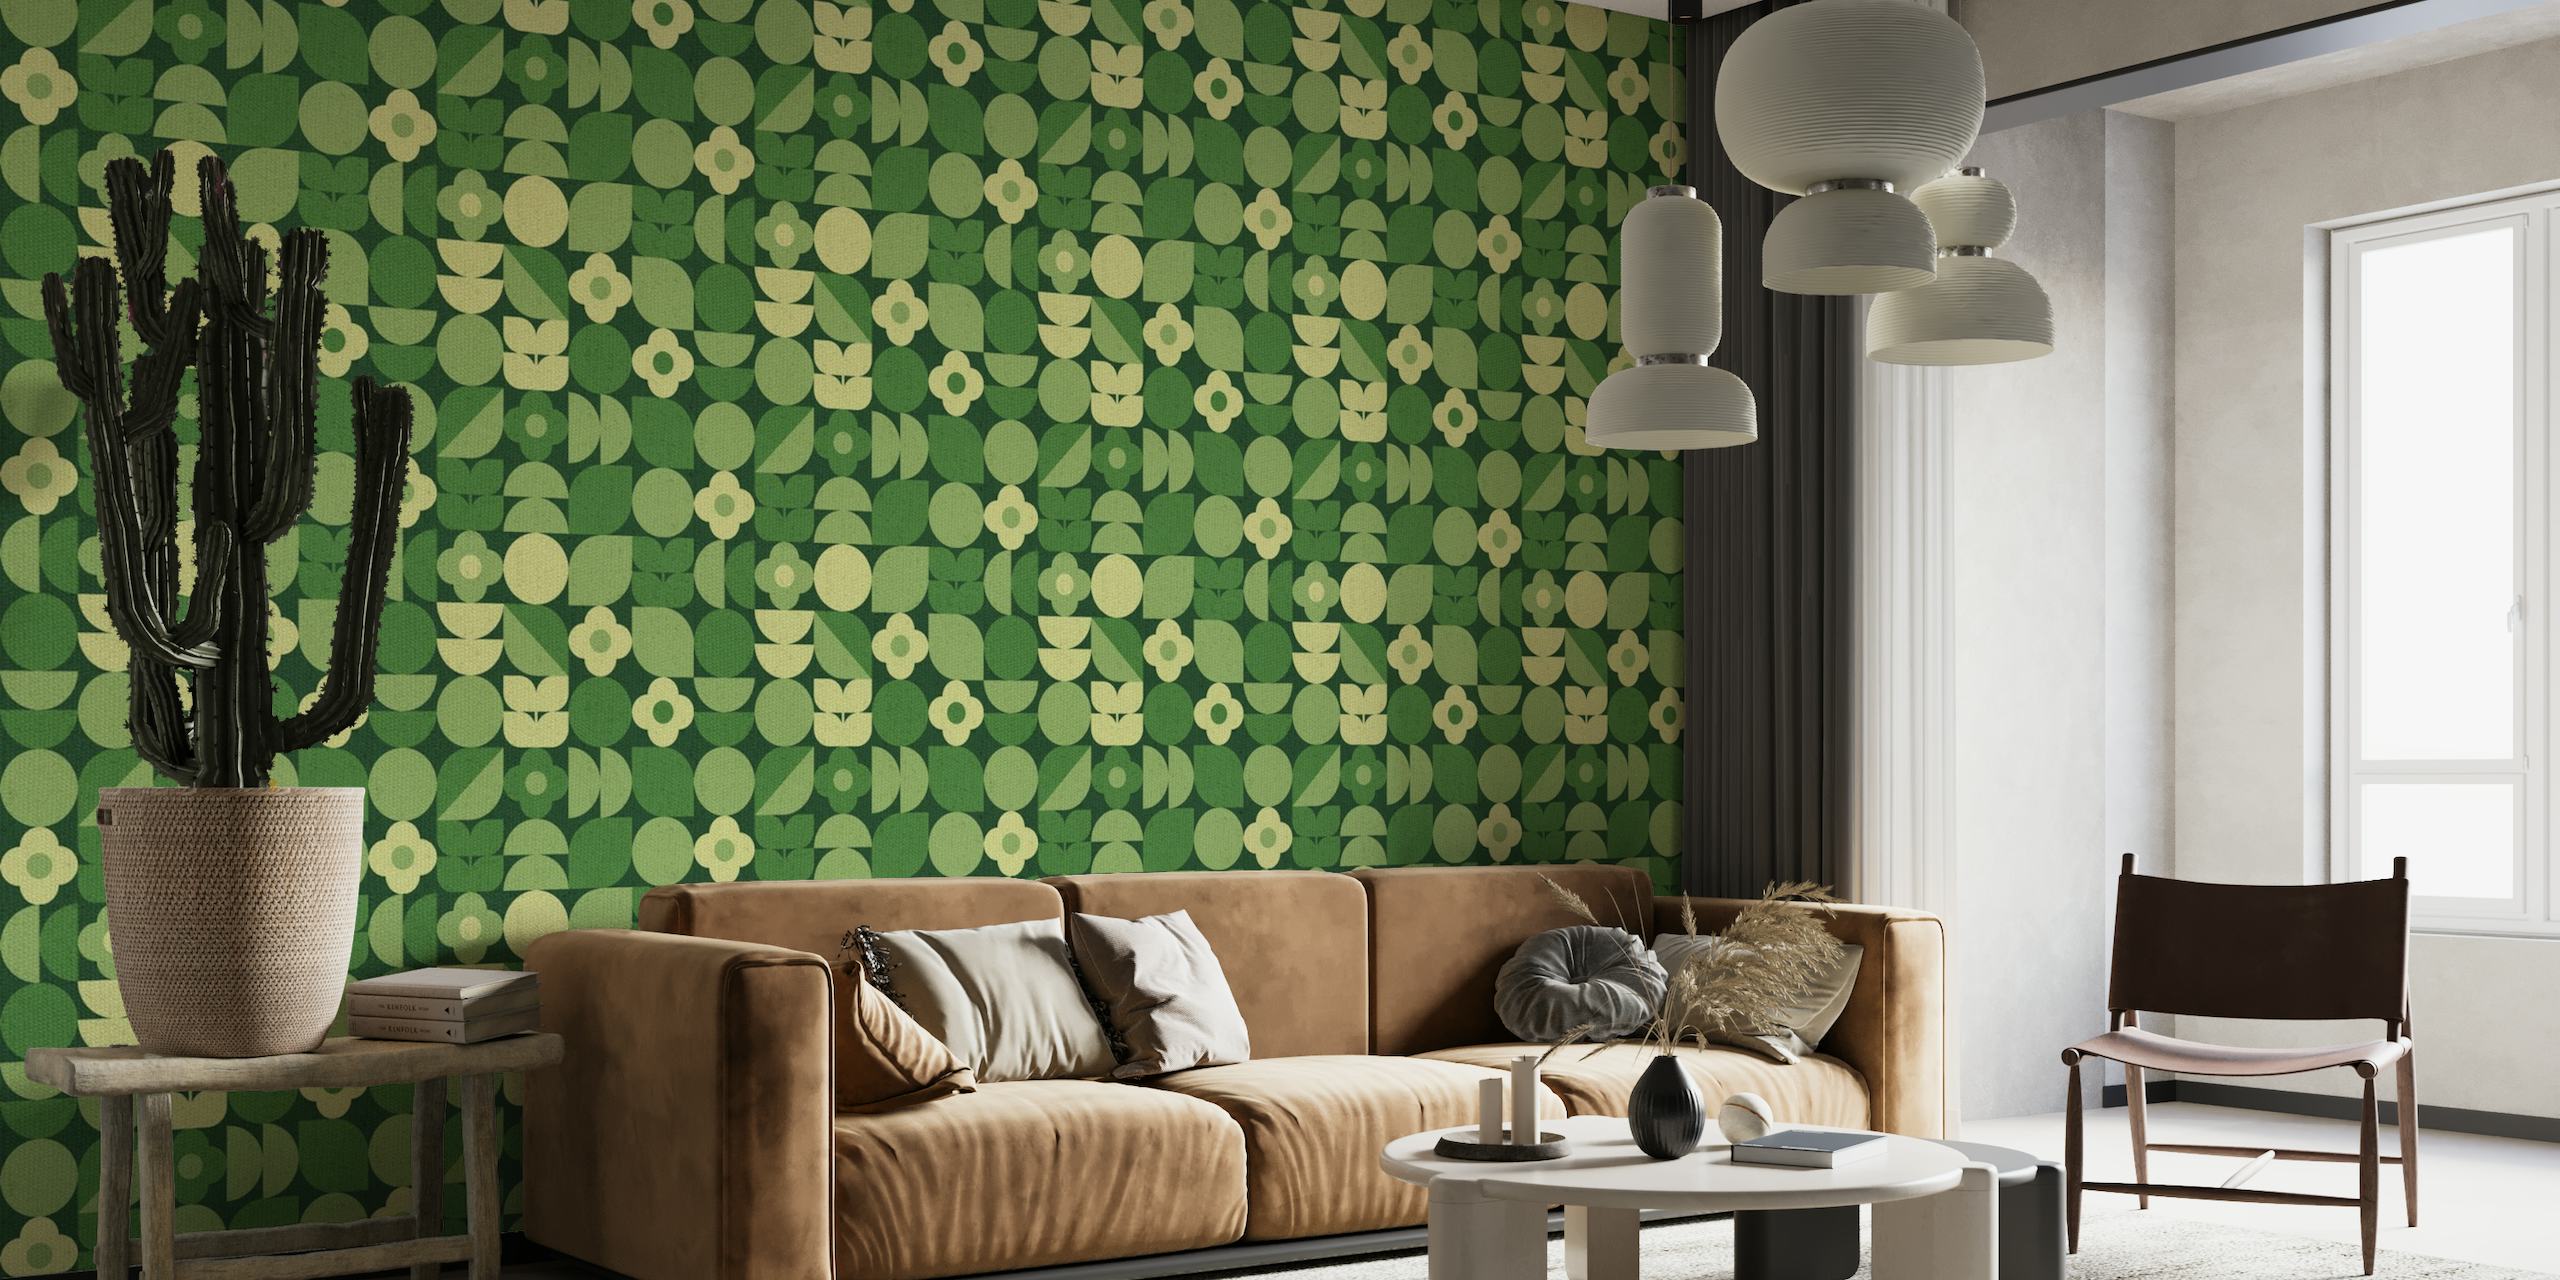 Geo Bauhaus Green Floral Shapes papel pintado